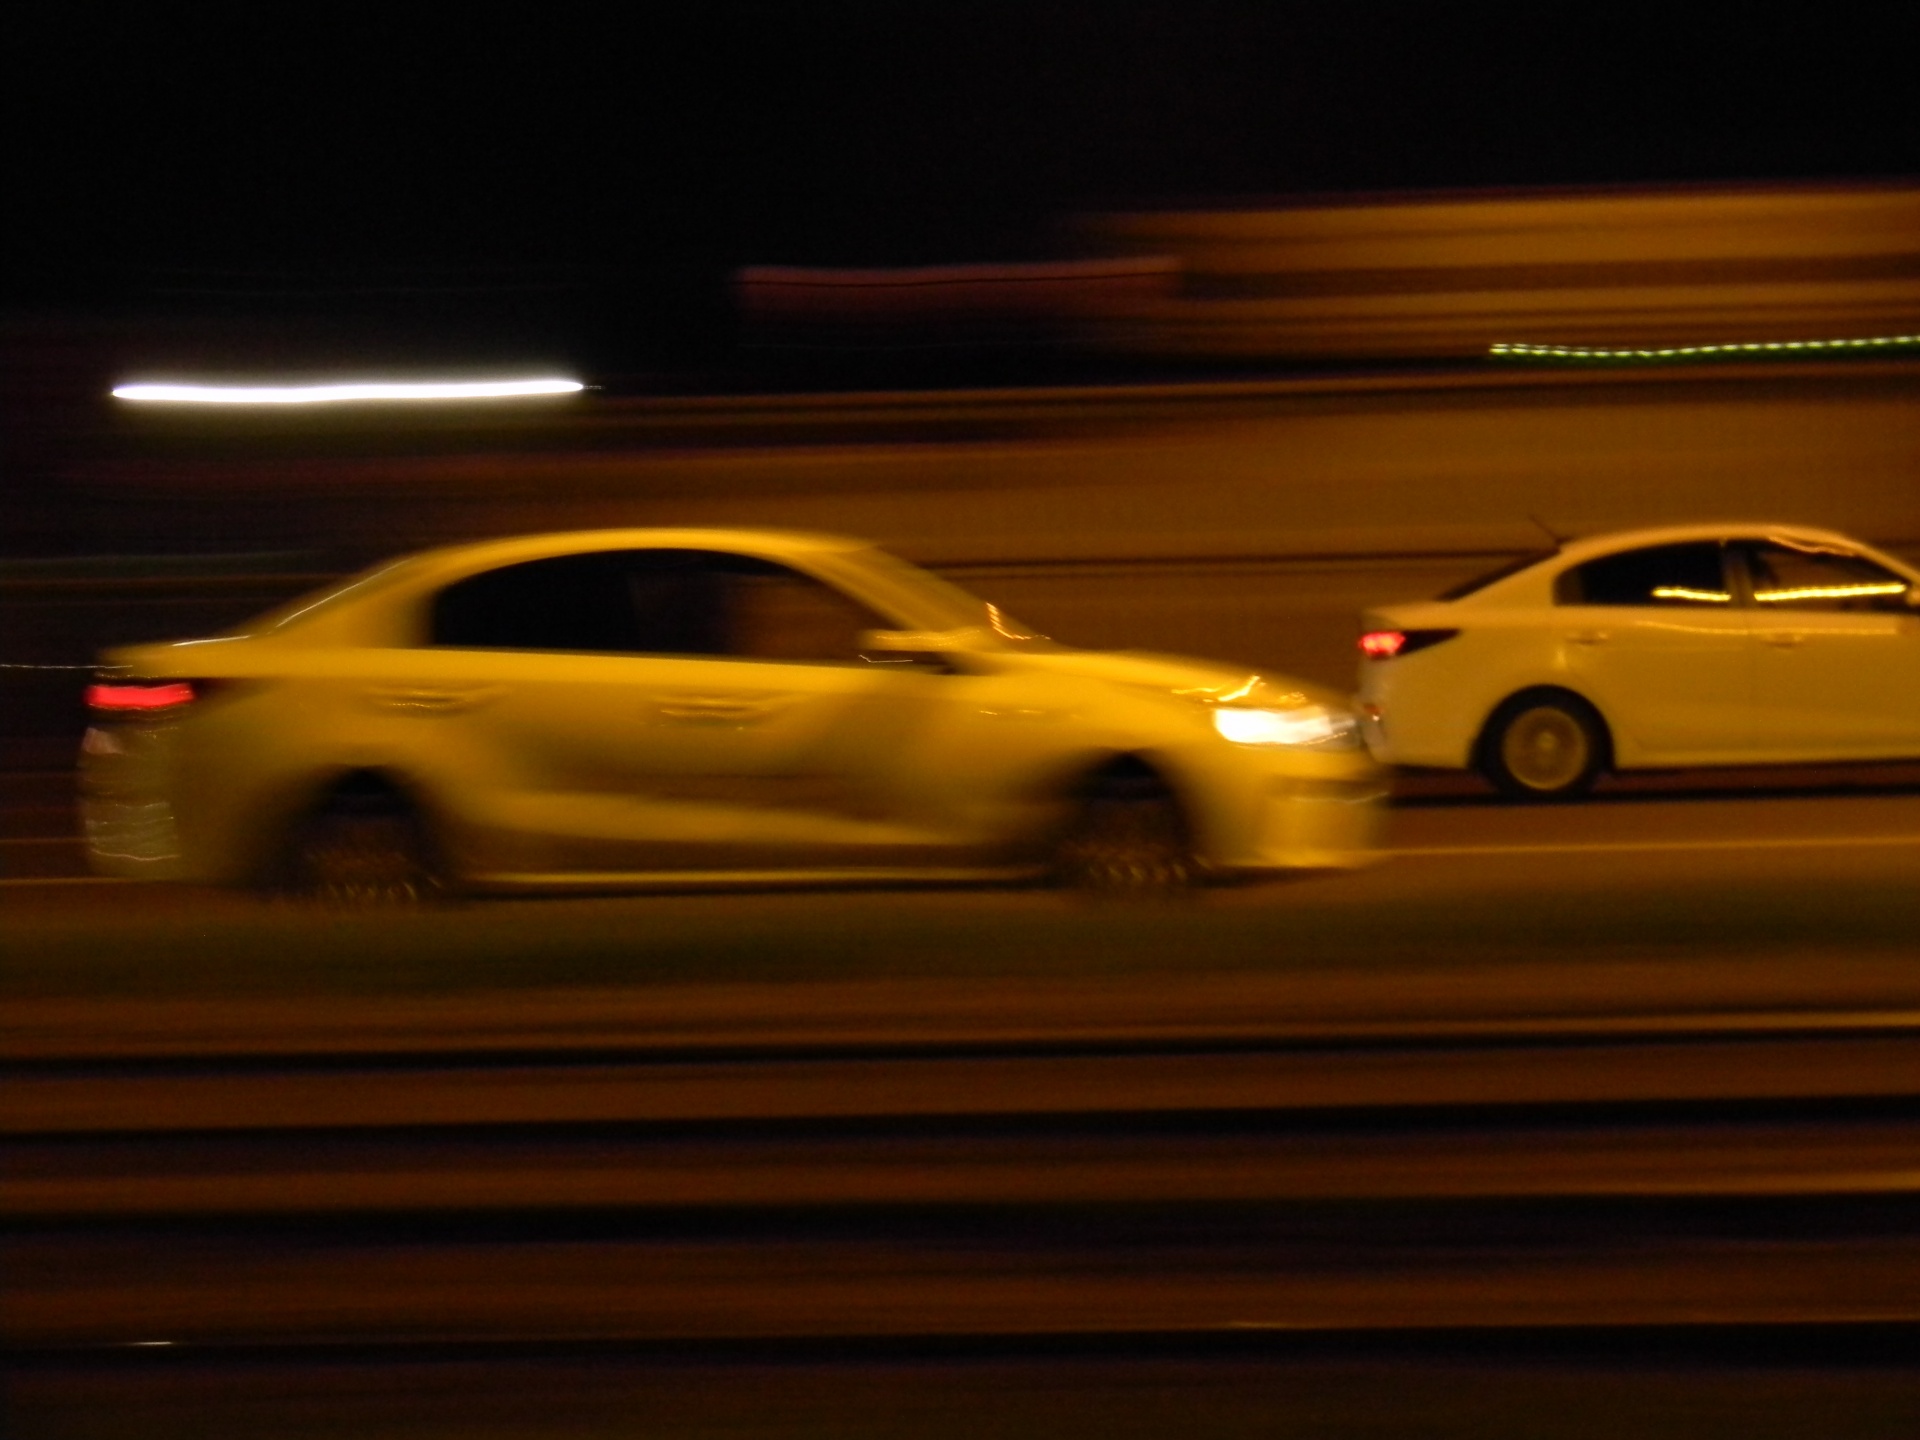 photography cars night blur